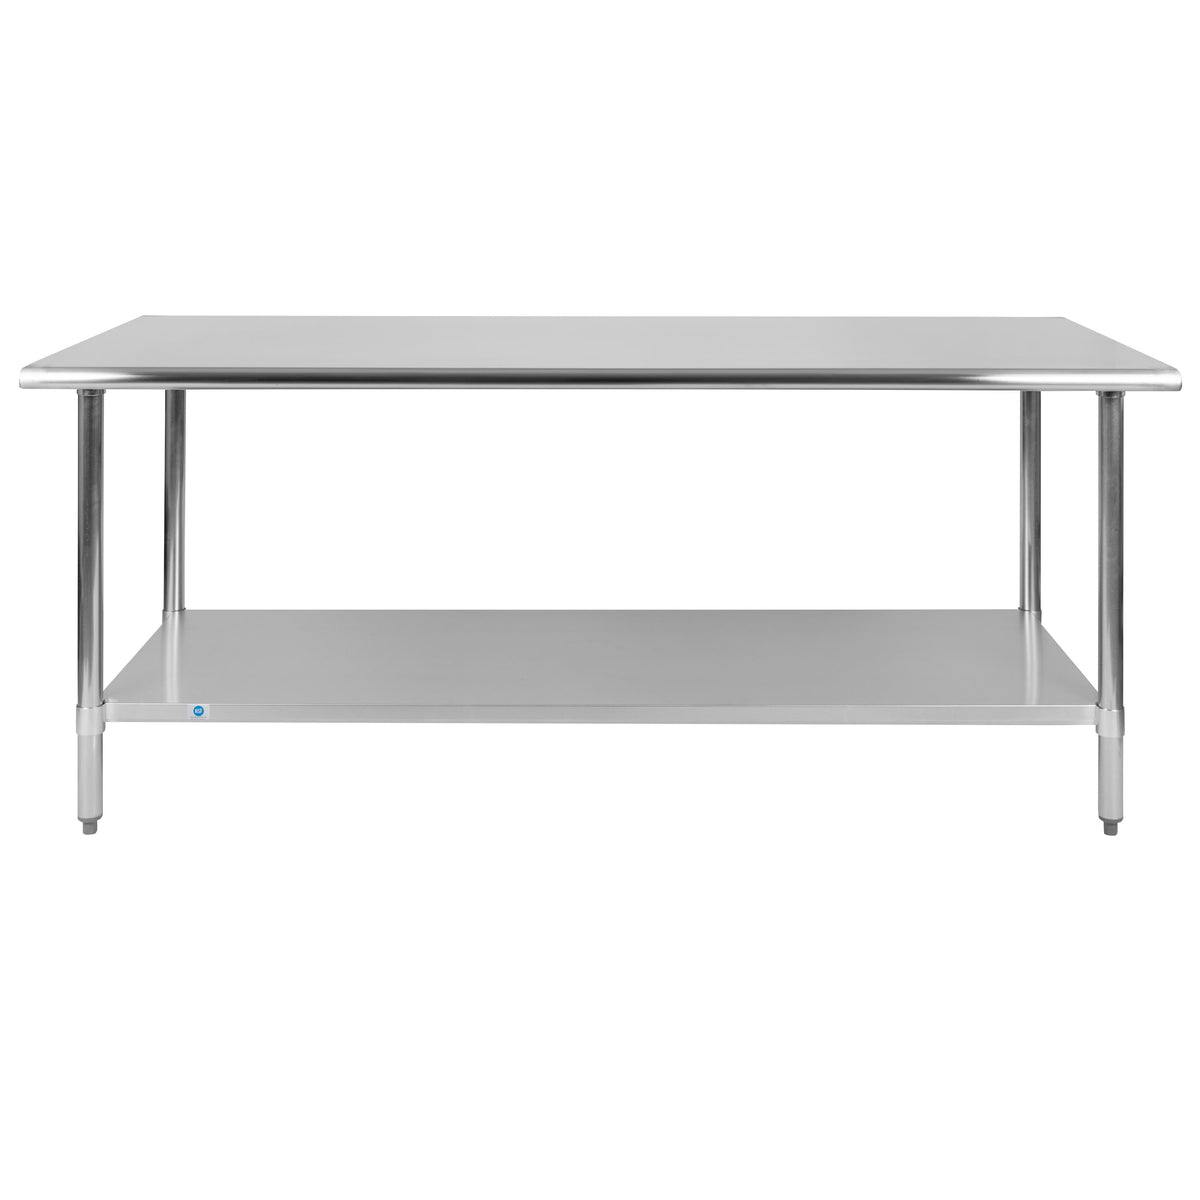 72"W x 30"D |#| Stainless Steel 18 Gauge Work Table with Undershelf, NSF - 72"W x 30"D x 34.5"H